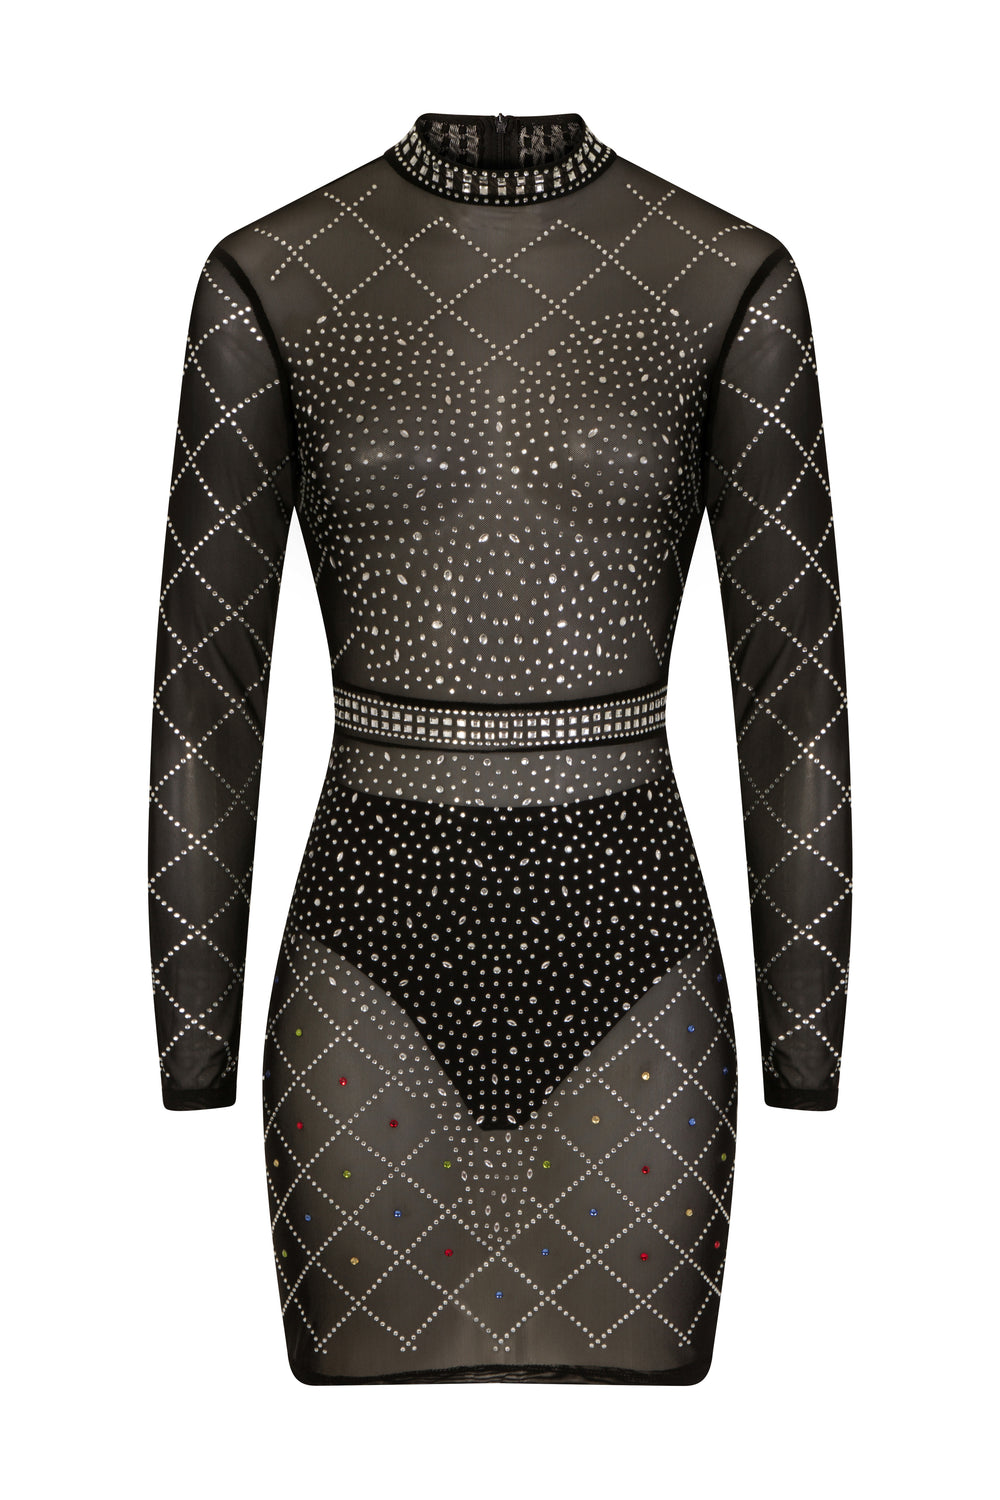 Lopez Black Crystal Rhinestone Embellished Sheer Mesh Bodycon Dress